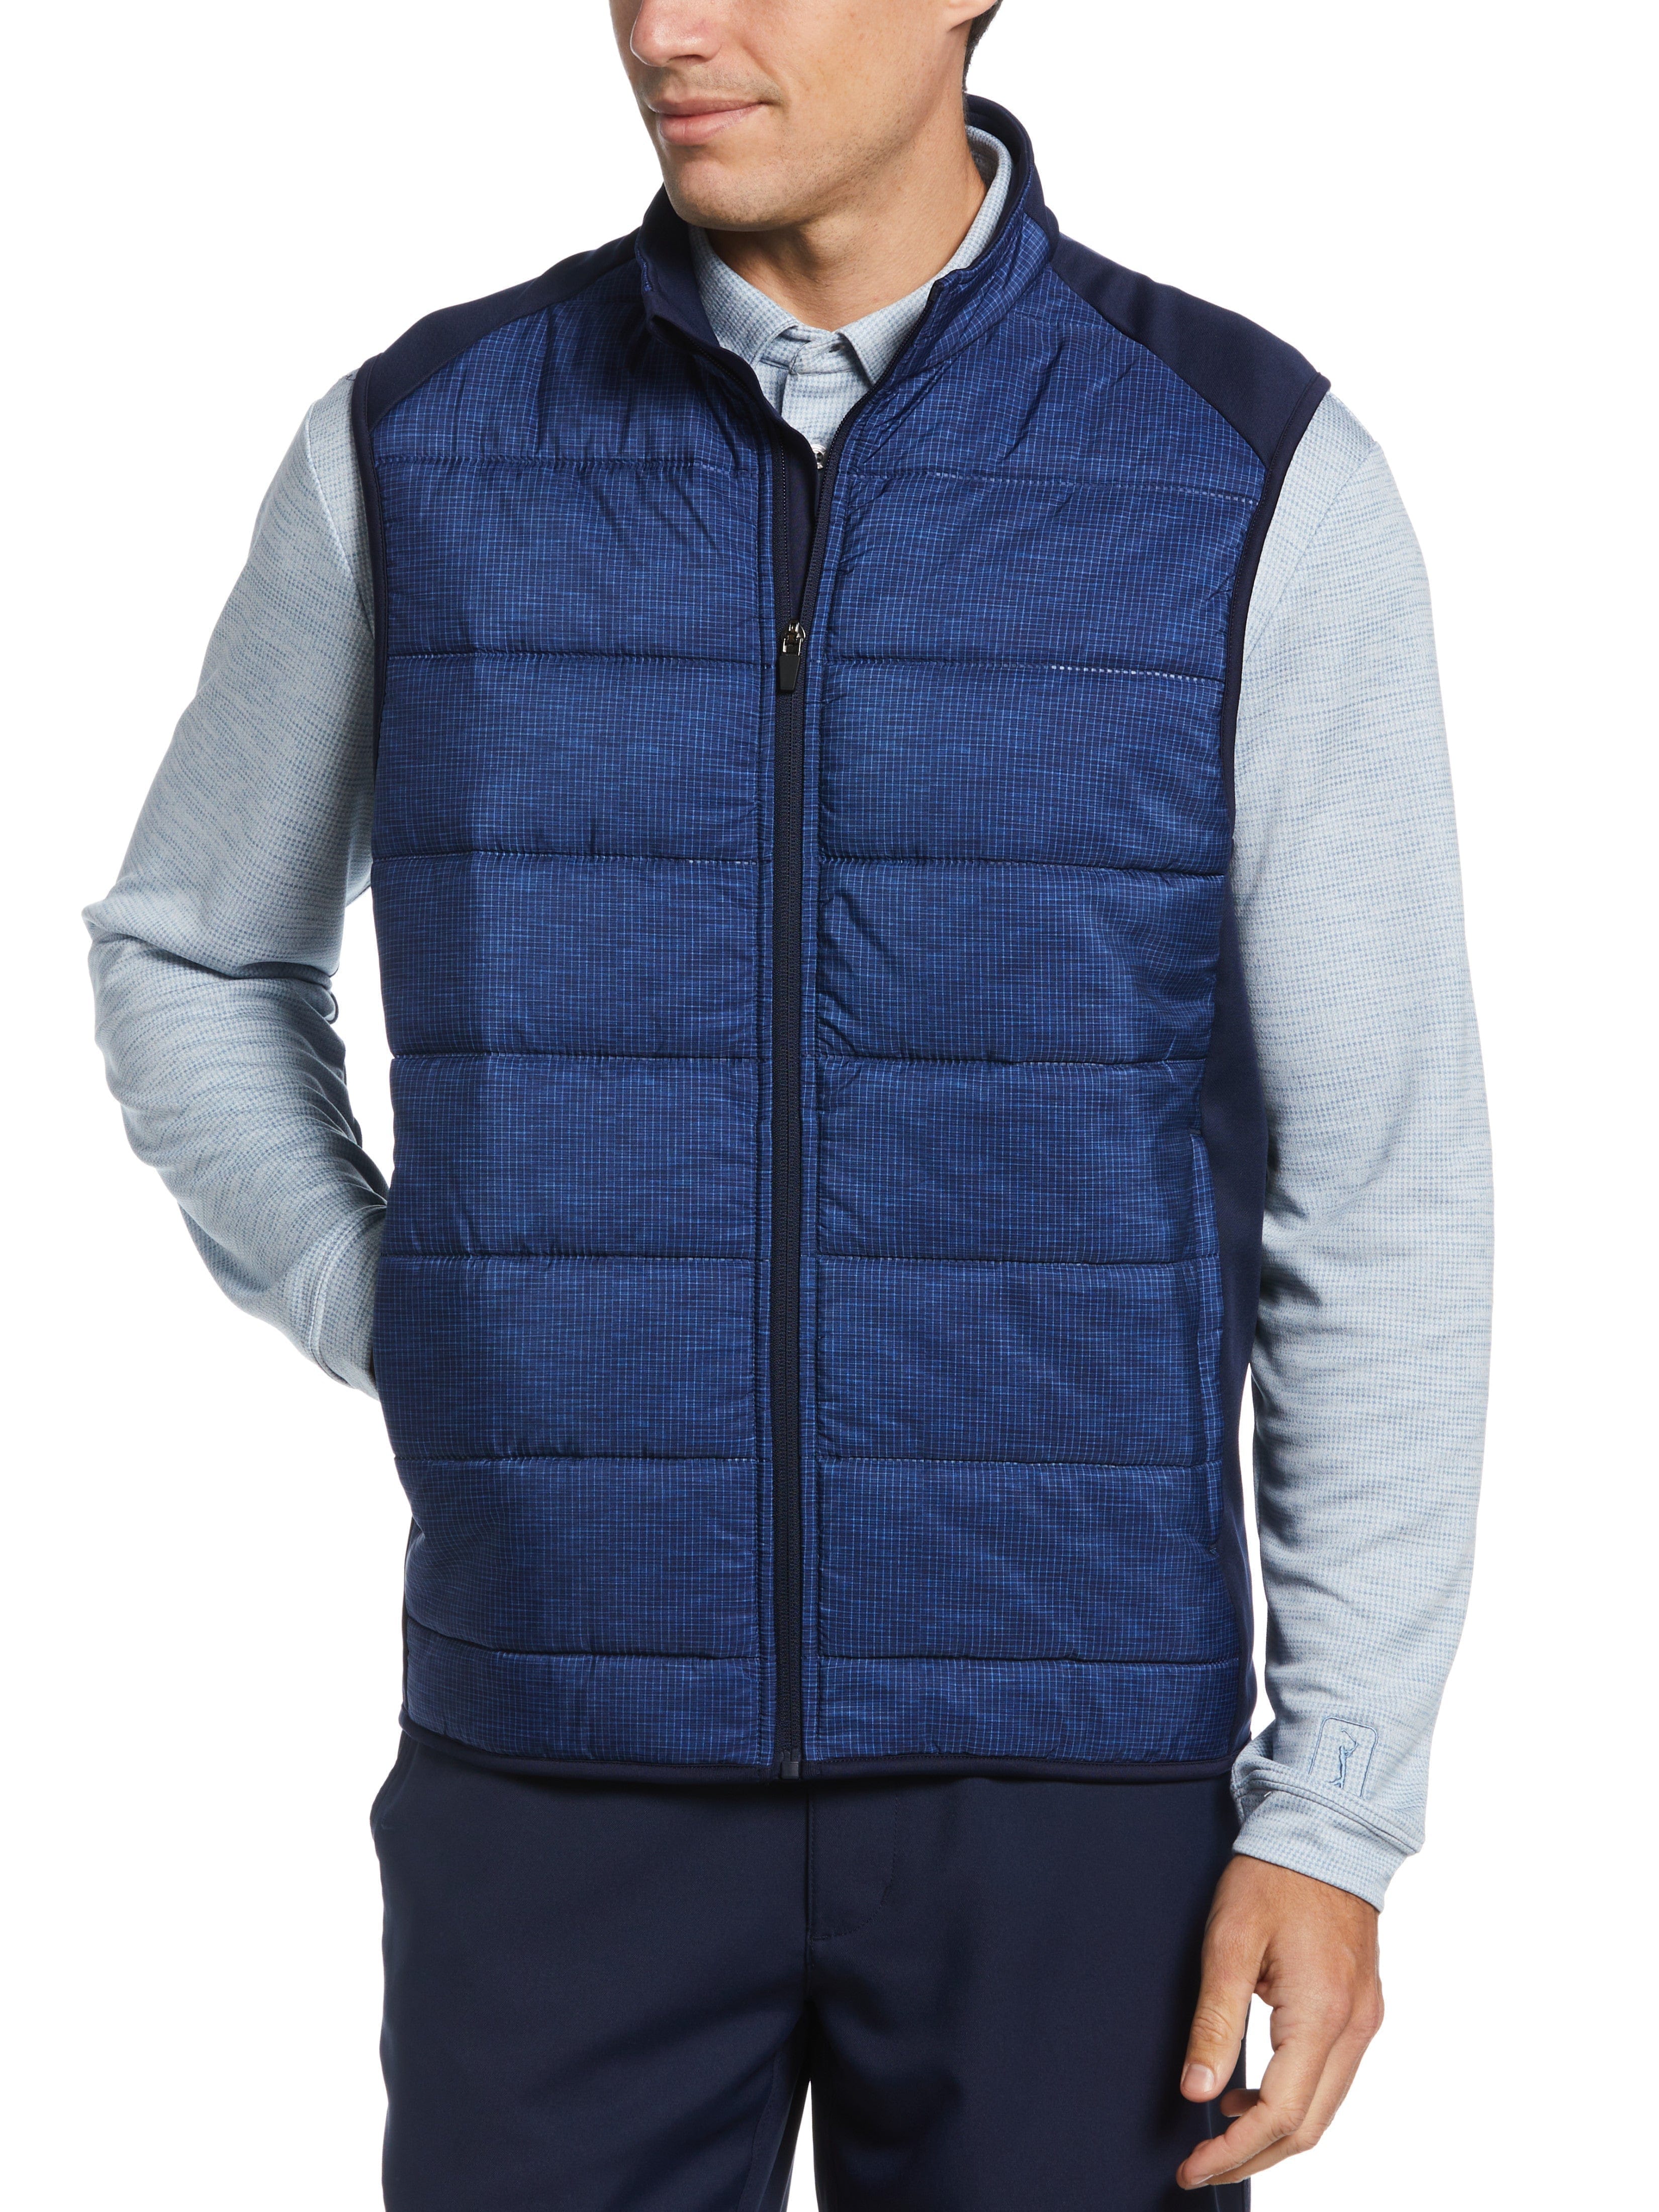 PGA TOUR Apparel Mens Ultrasonic Print Full Zip Golf Vest Jacket Top, Size Large, Navy Blue, 100% Polyester | Golf Apparel Shop